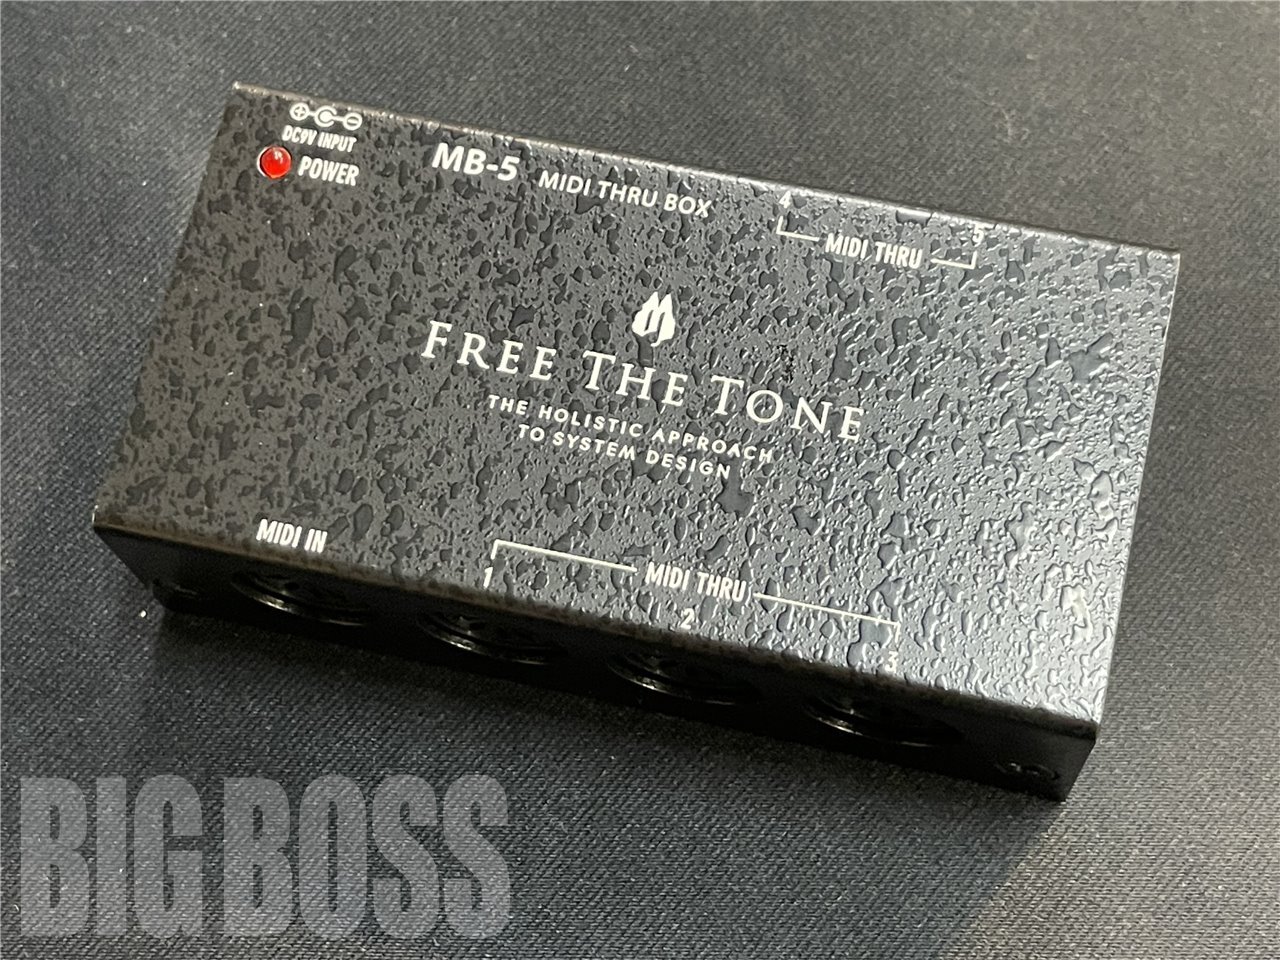 free the tone MB-5 MIDI THRU BOX